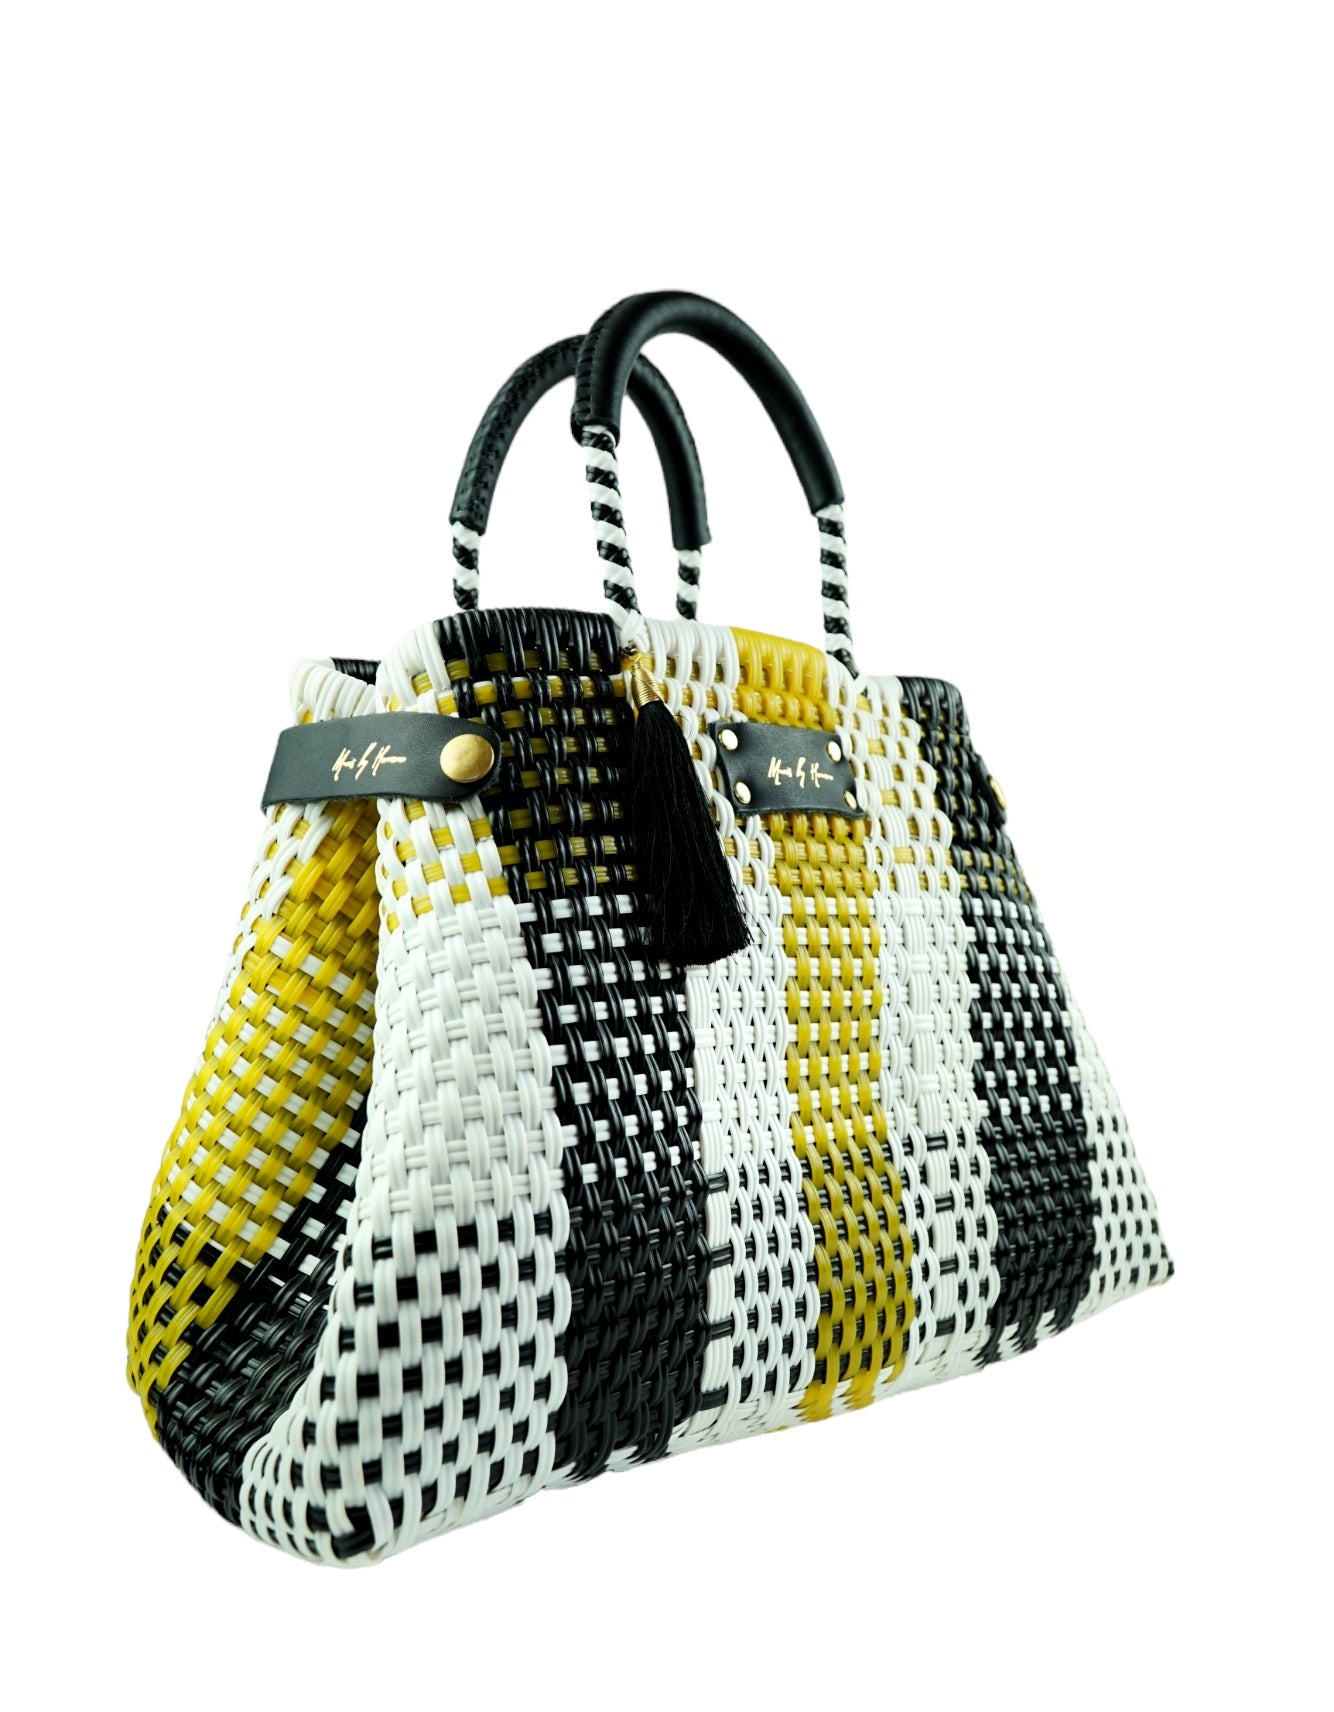 Luxury Sustainable Women's Handbags - Mavis by Herrera